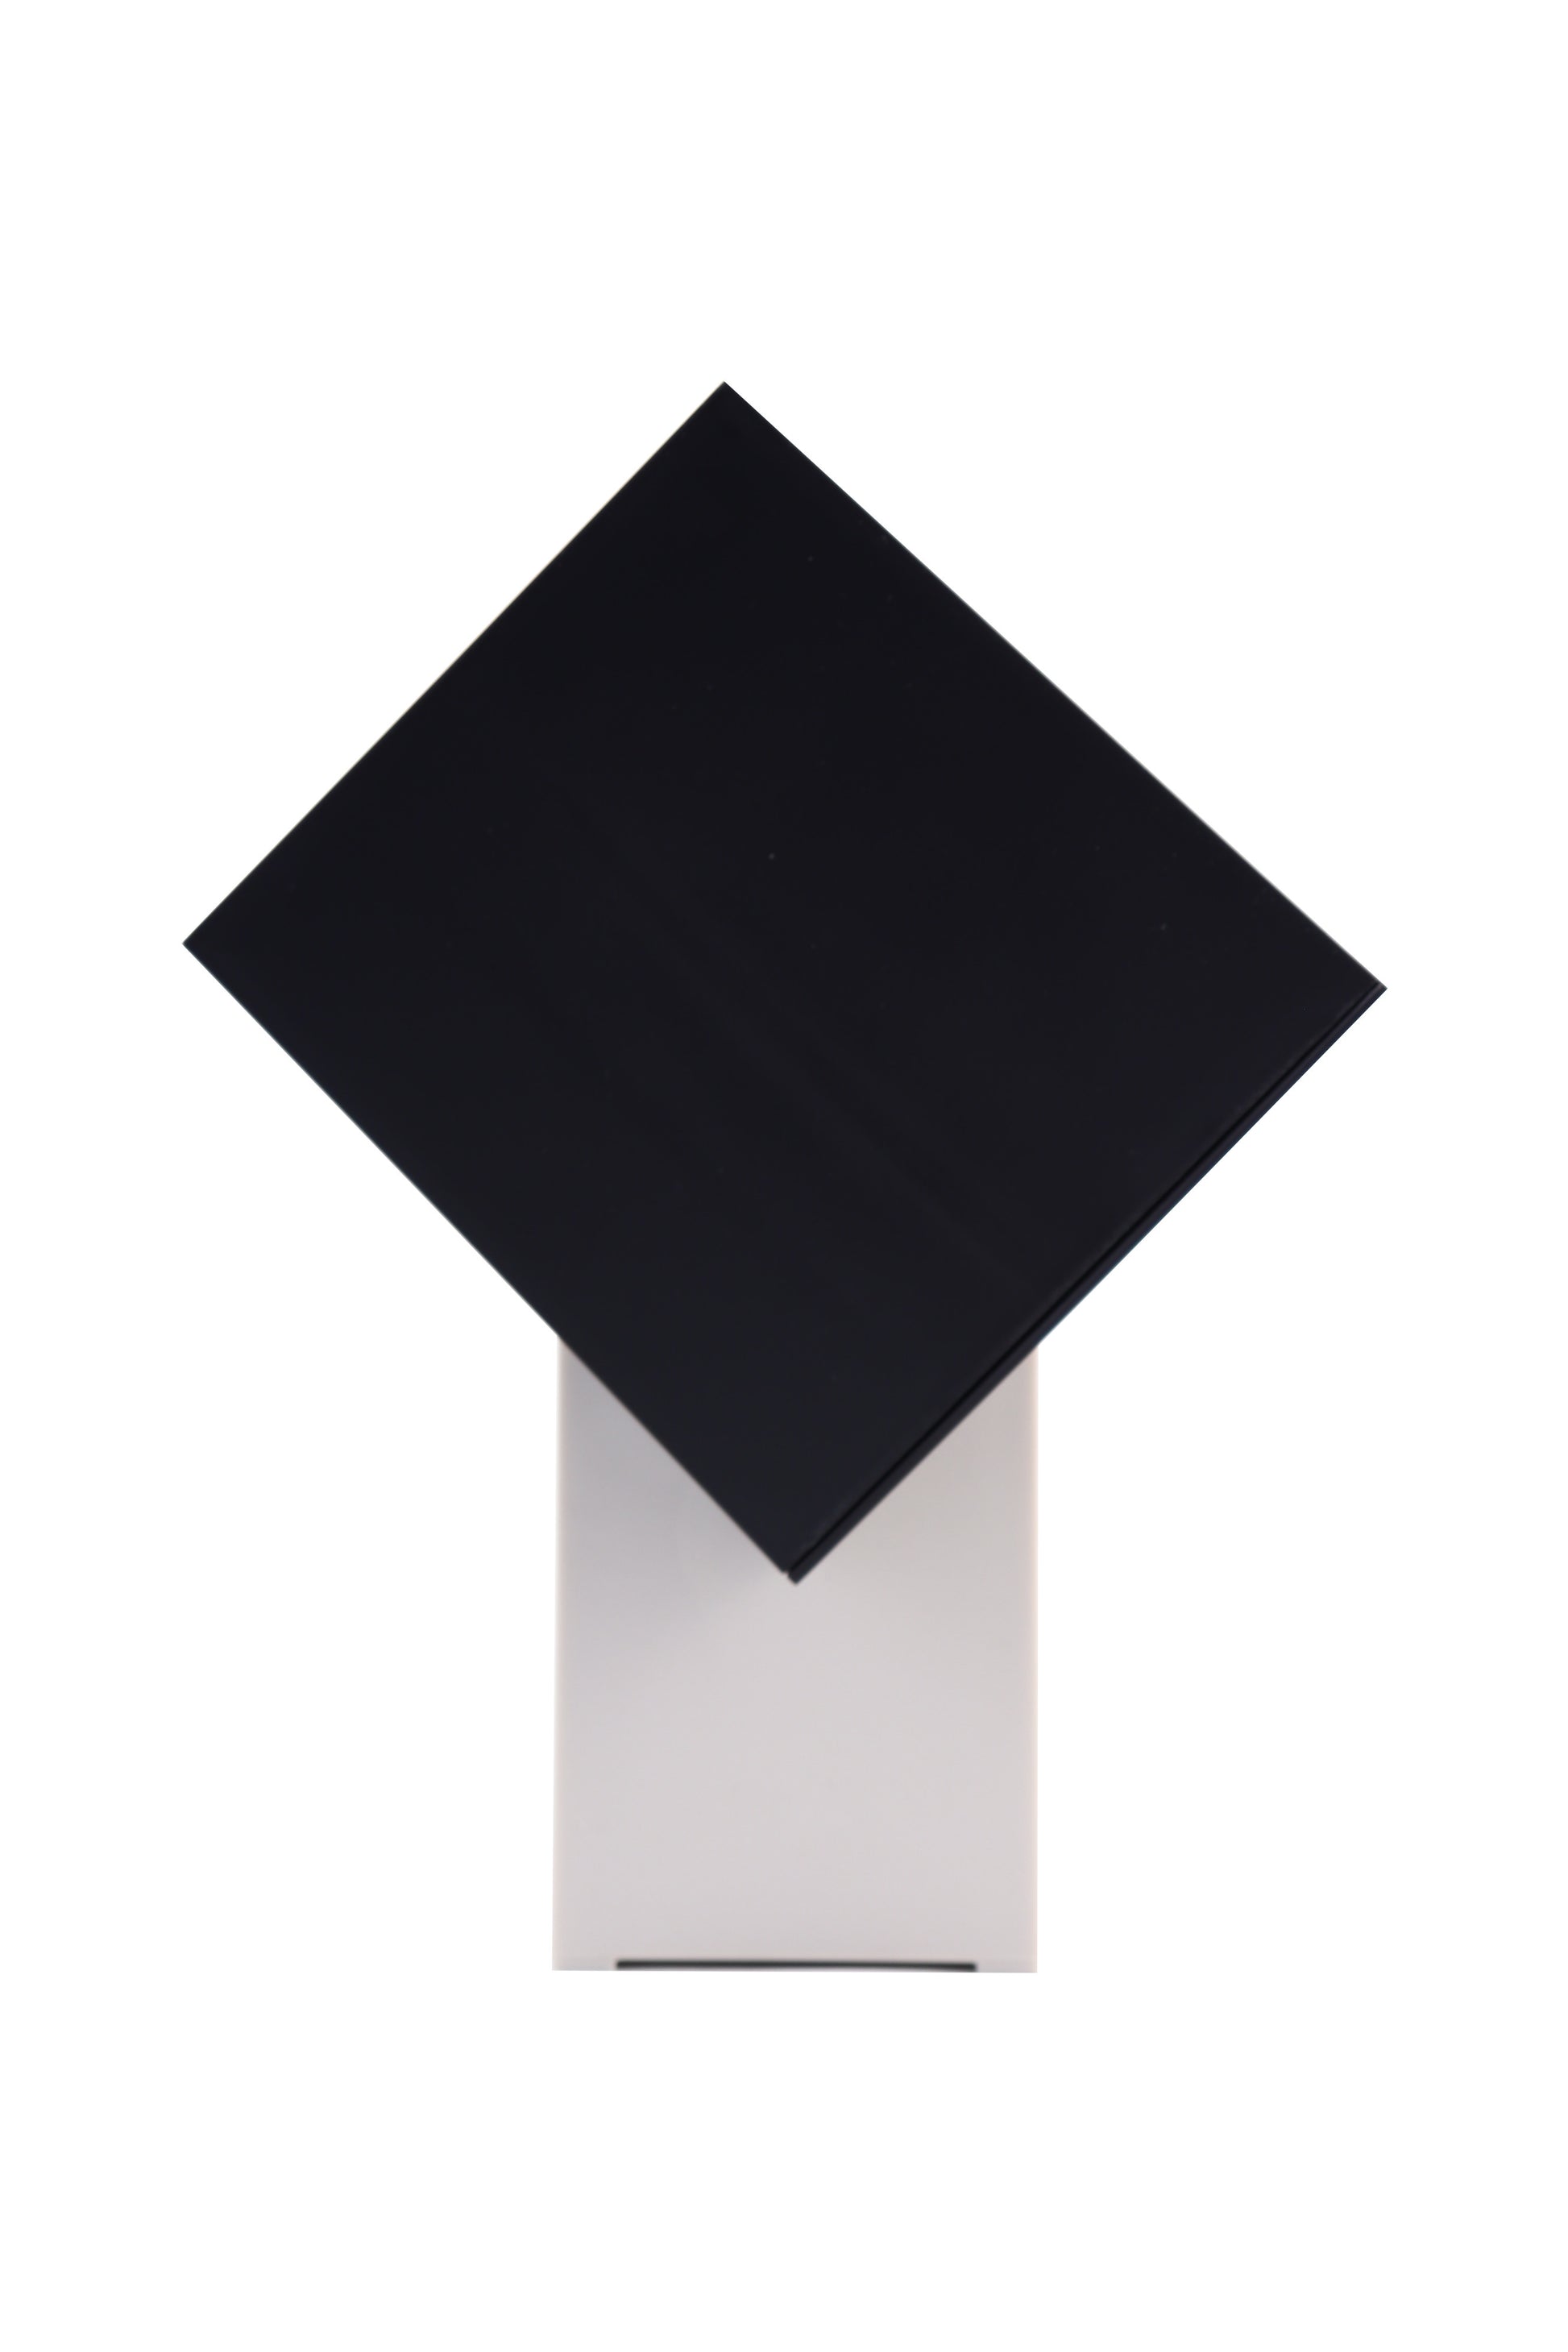 Zojila.com: Zaforas Tissue Holder : Stylish & Sleek Black Angled Tissue Holder with Ivory Pedestal Side view: Dining & Kitchen